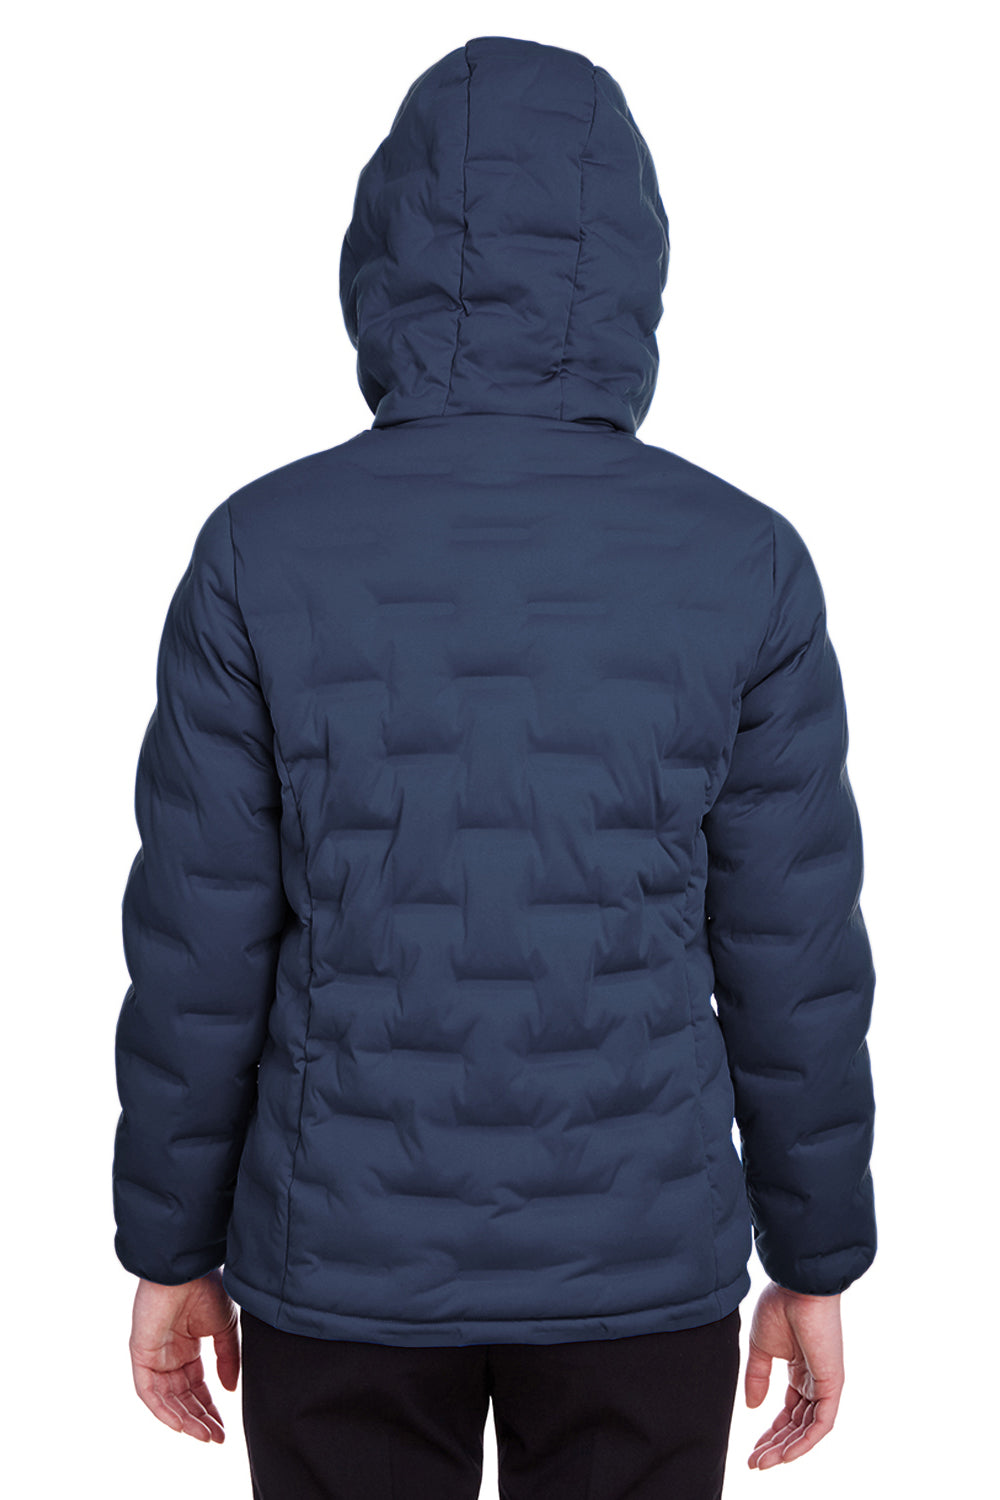 North End NE708W Womens Loft Waterproof Full Zip Hooded Puffer Jacket Navy Blue/Carbon Grey Back